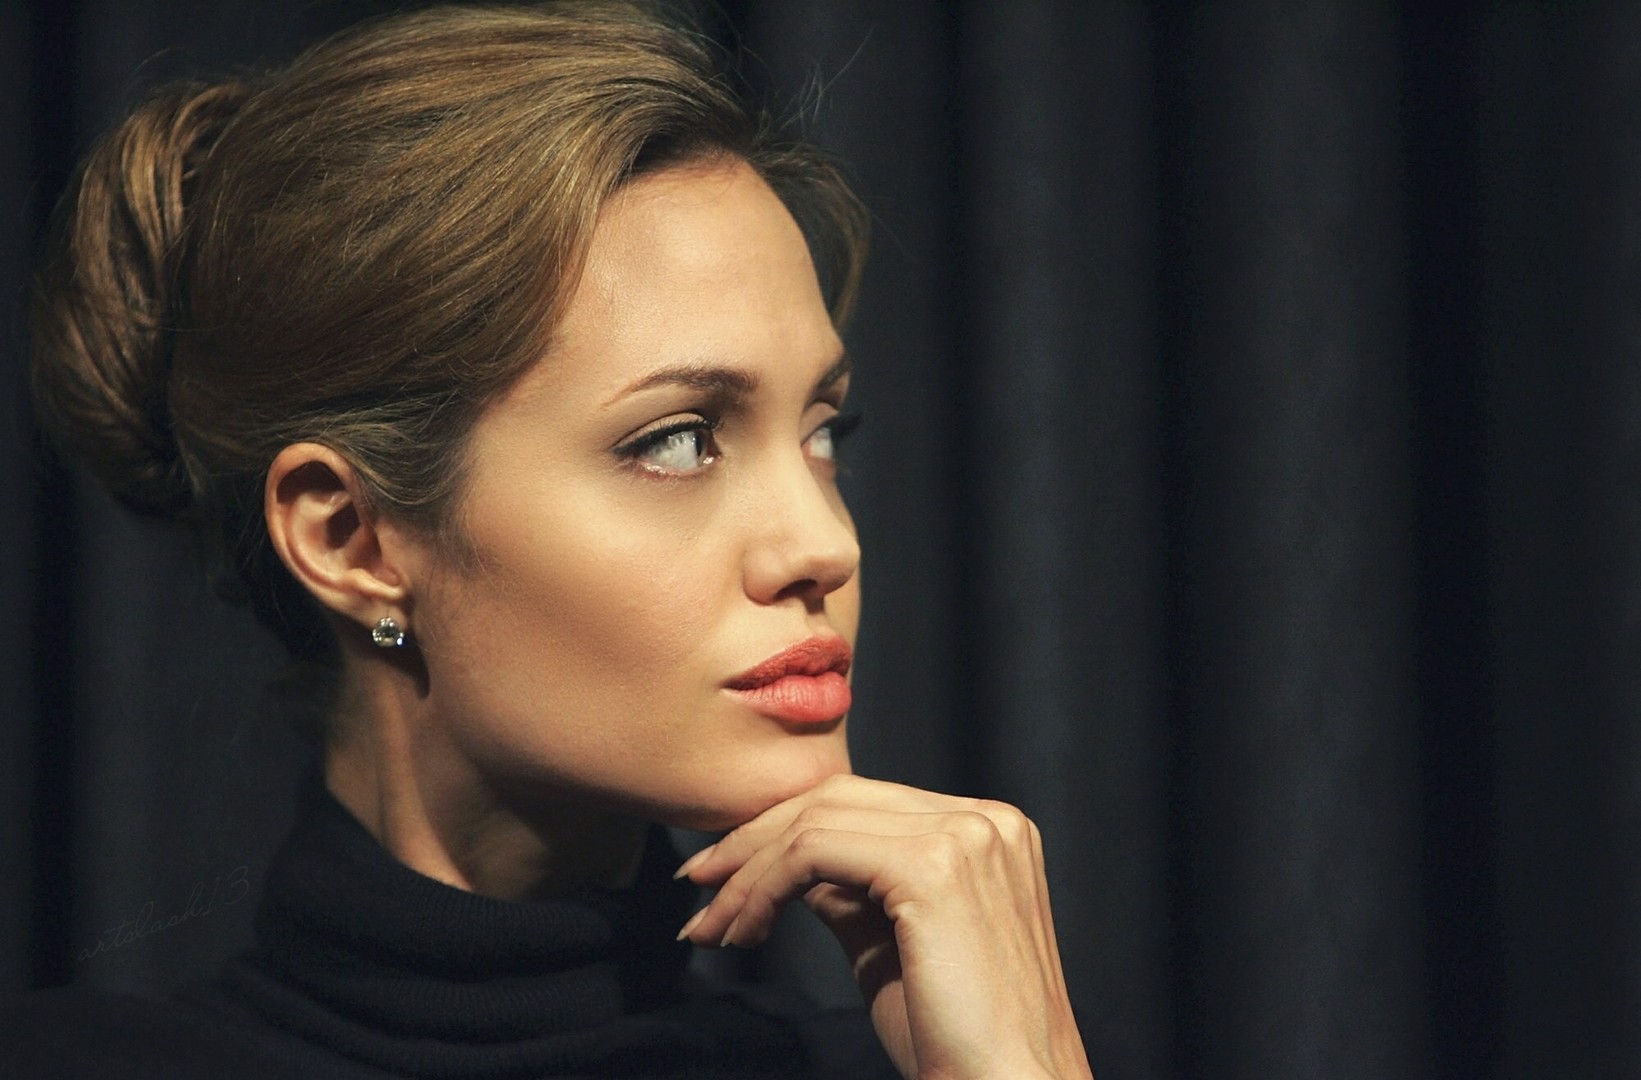 Angelina Jolie Actress Women Brunette Hairbun Profile Looking Away Thinking Ear Studs Portrait 1641x1080